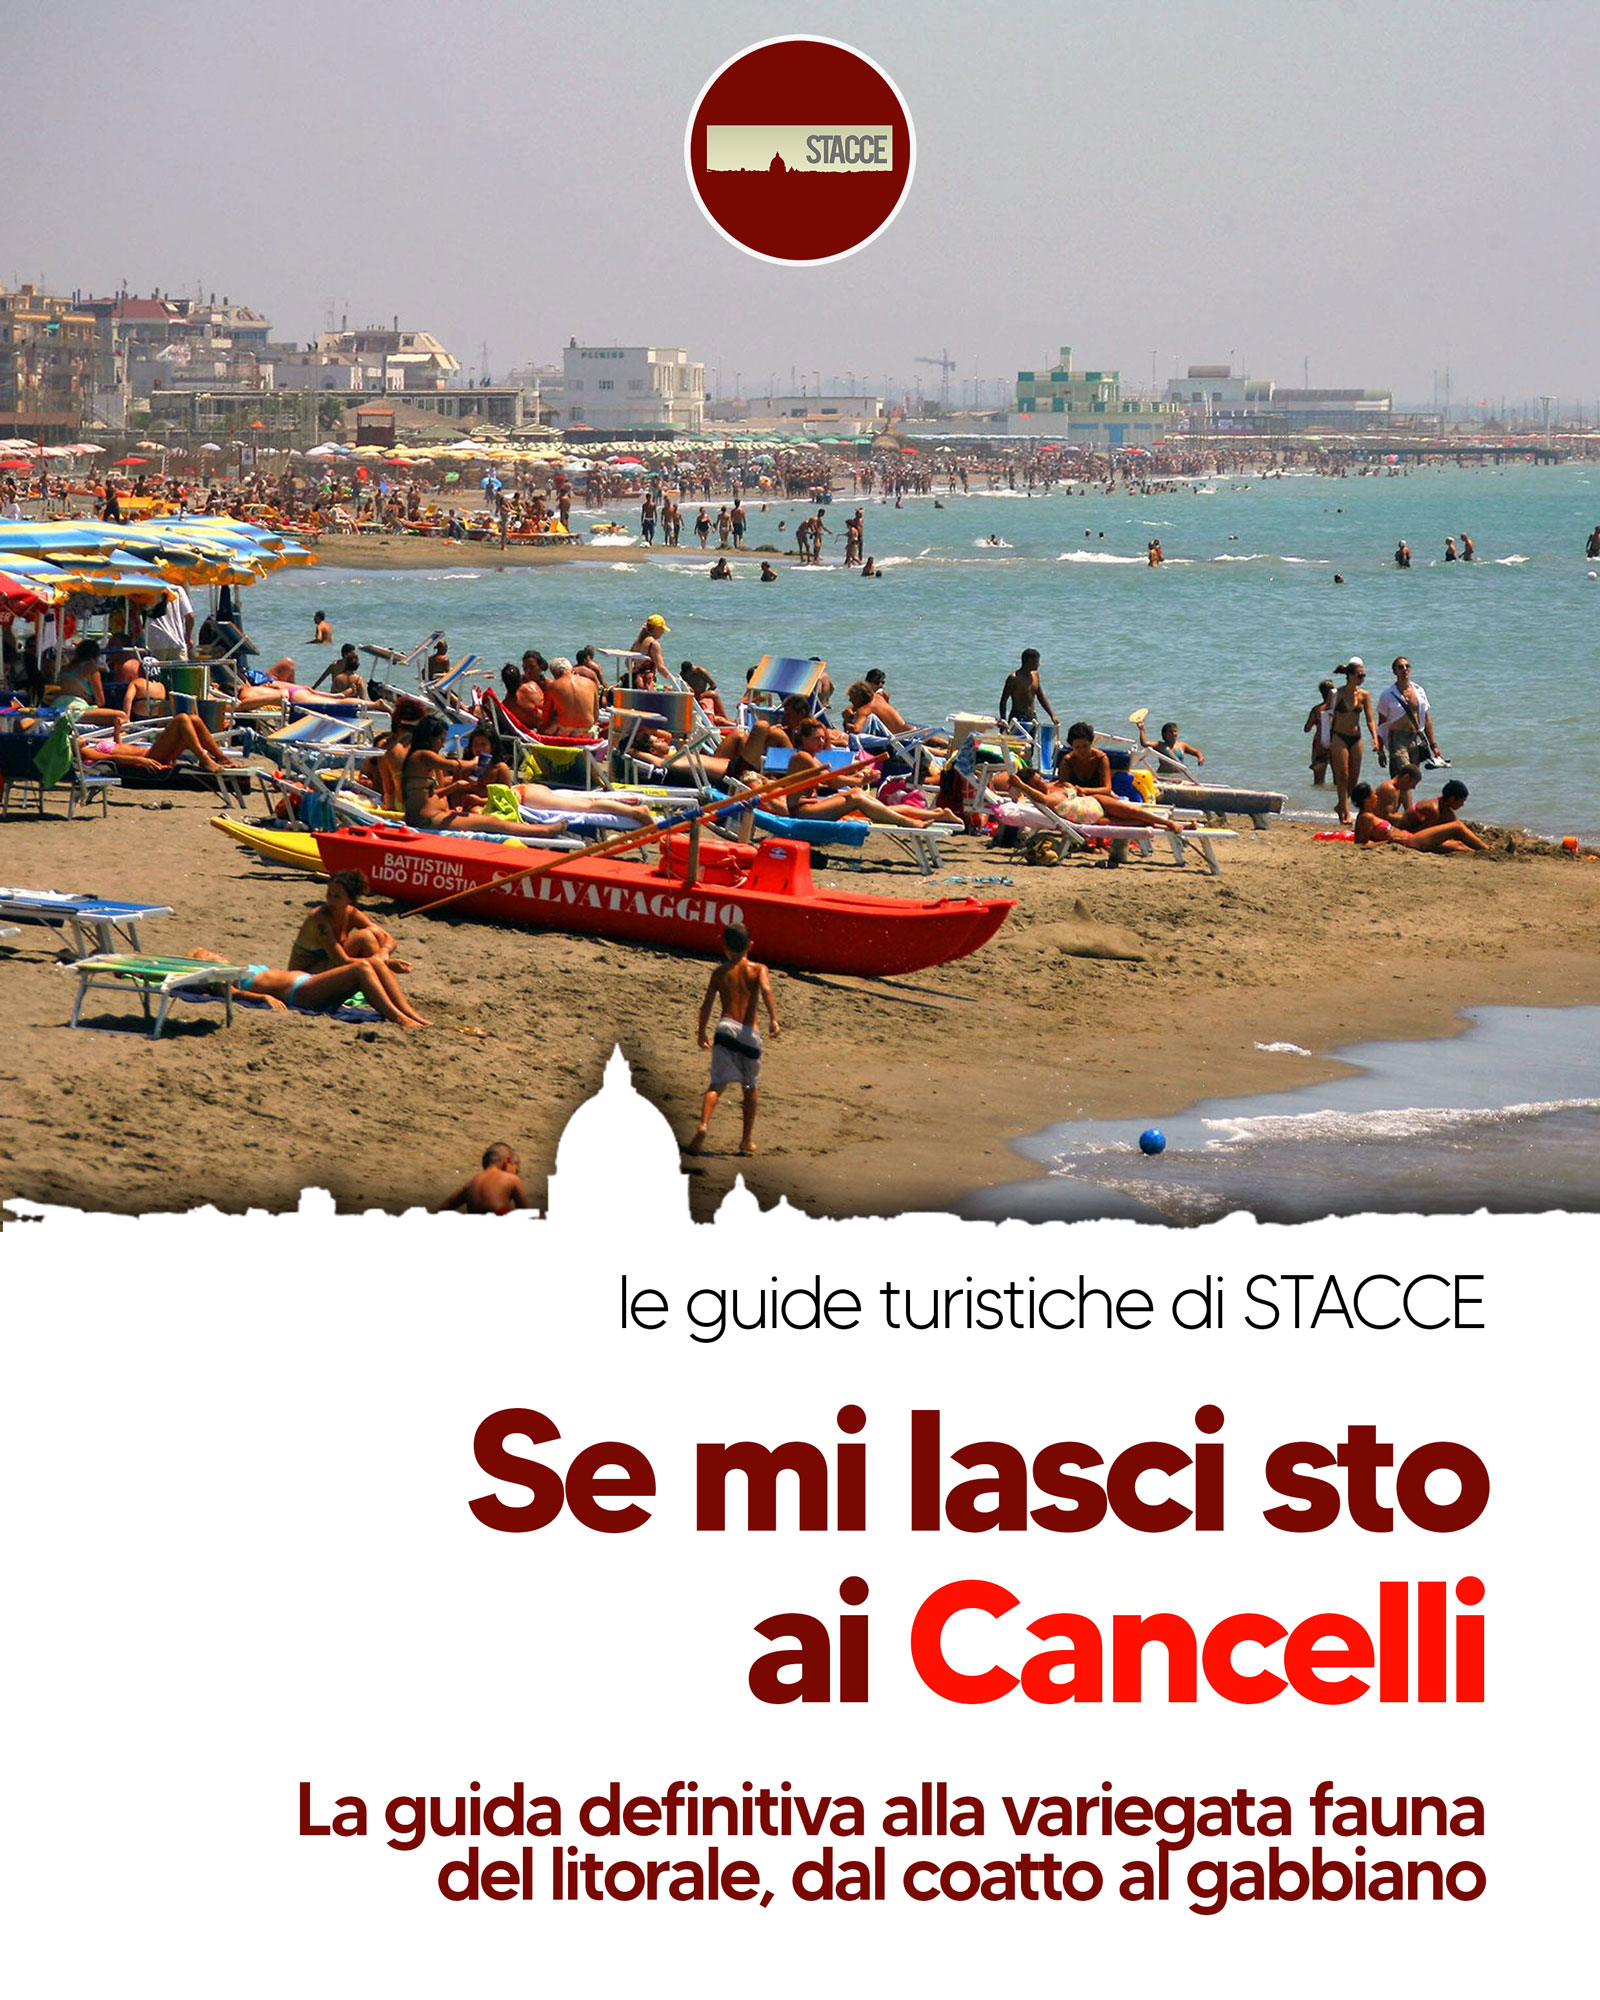 Cancelli